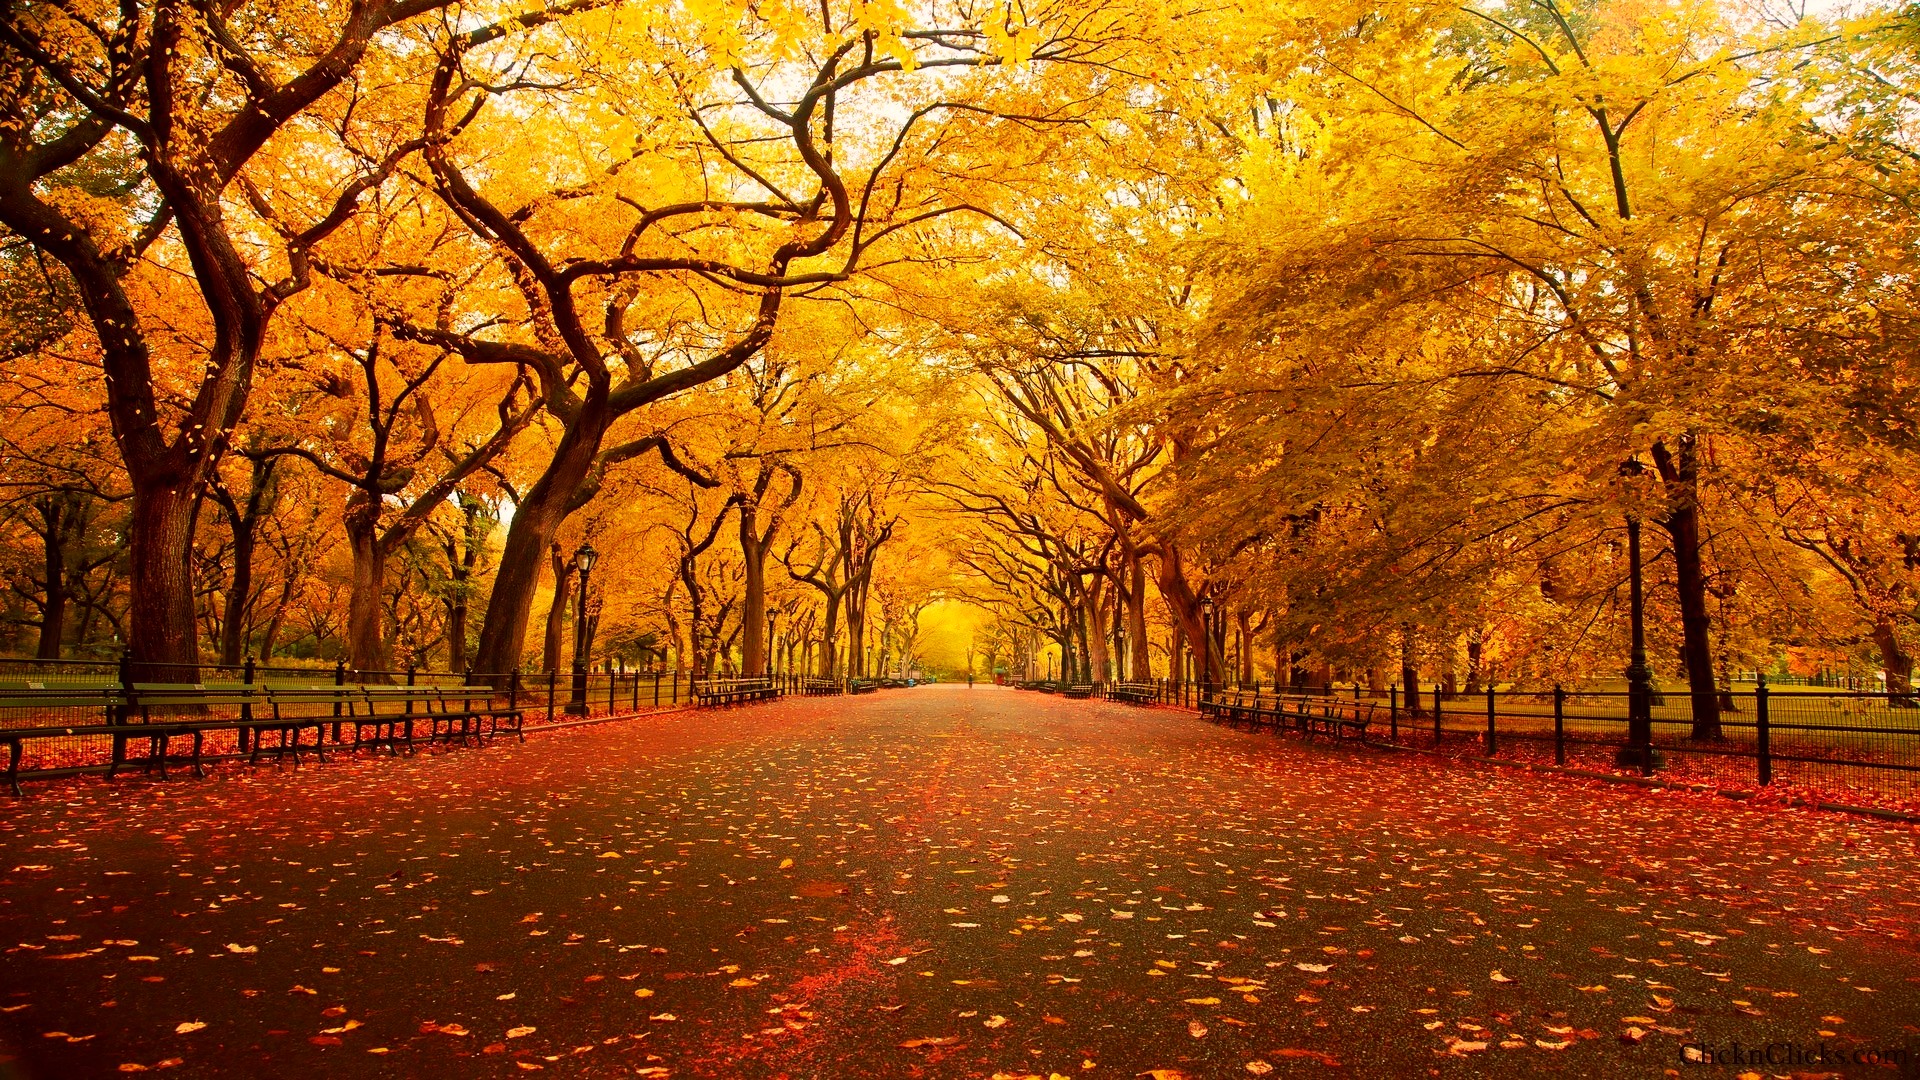 Autumn in Central Park New York City. Central Park New York City